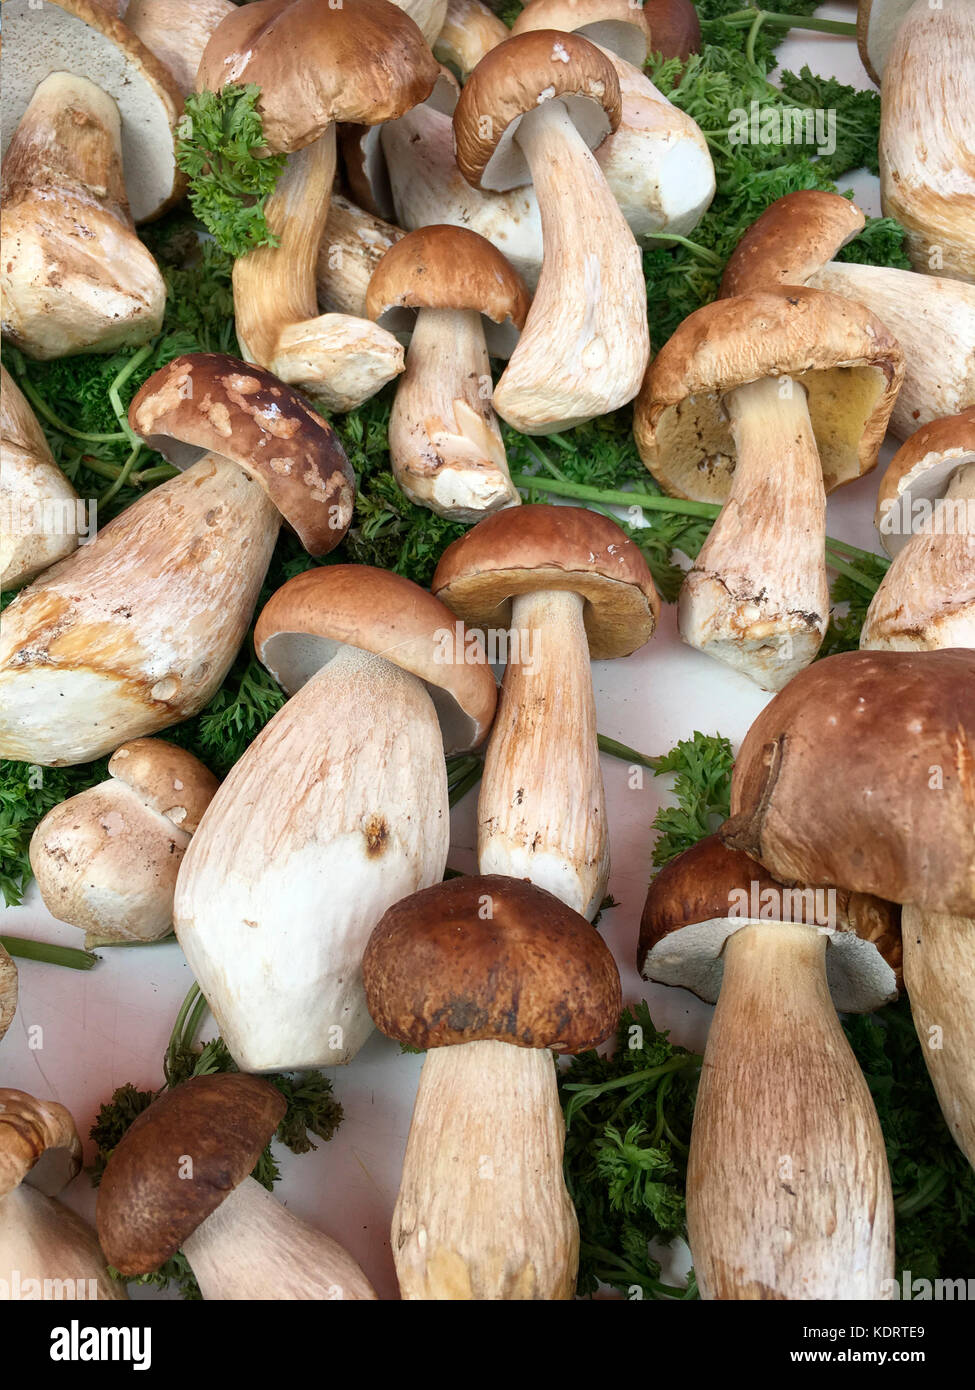 Selection of freshly foraged wild mushrooms Stock Photo